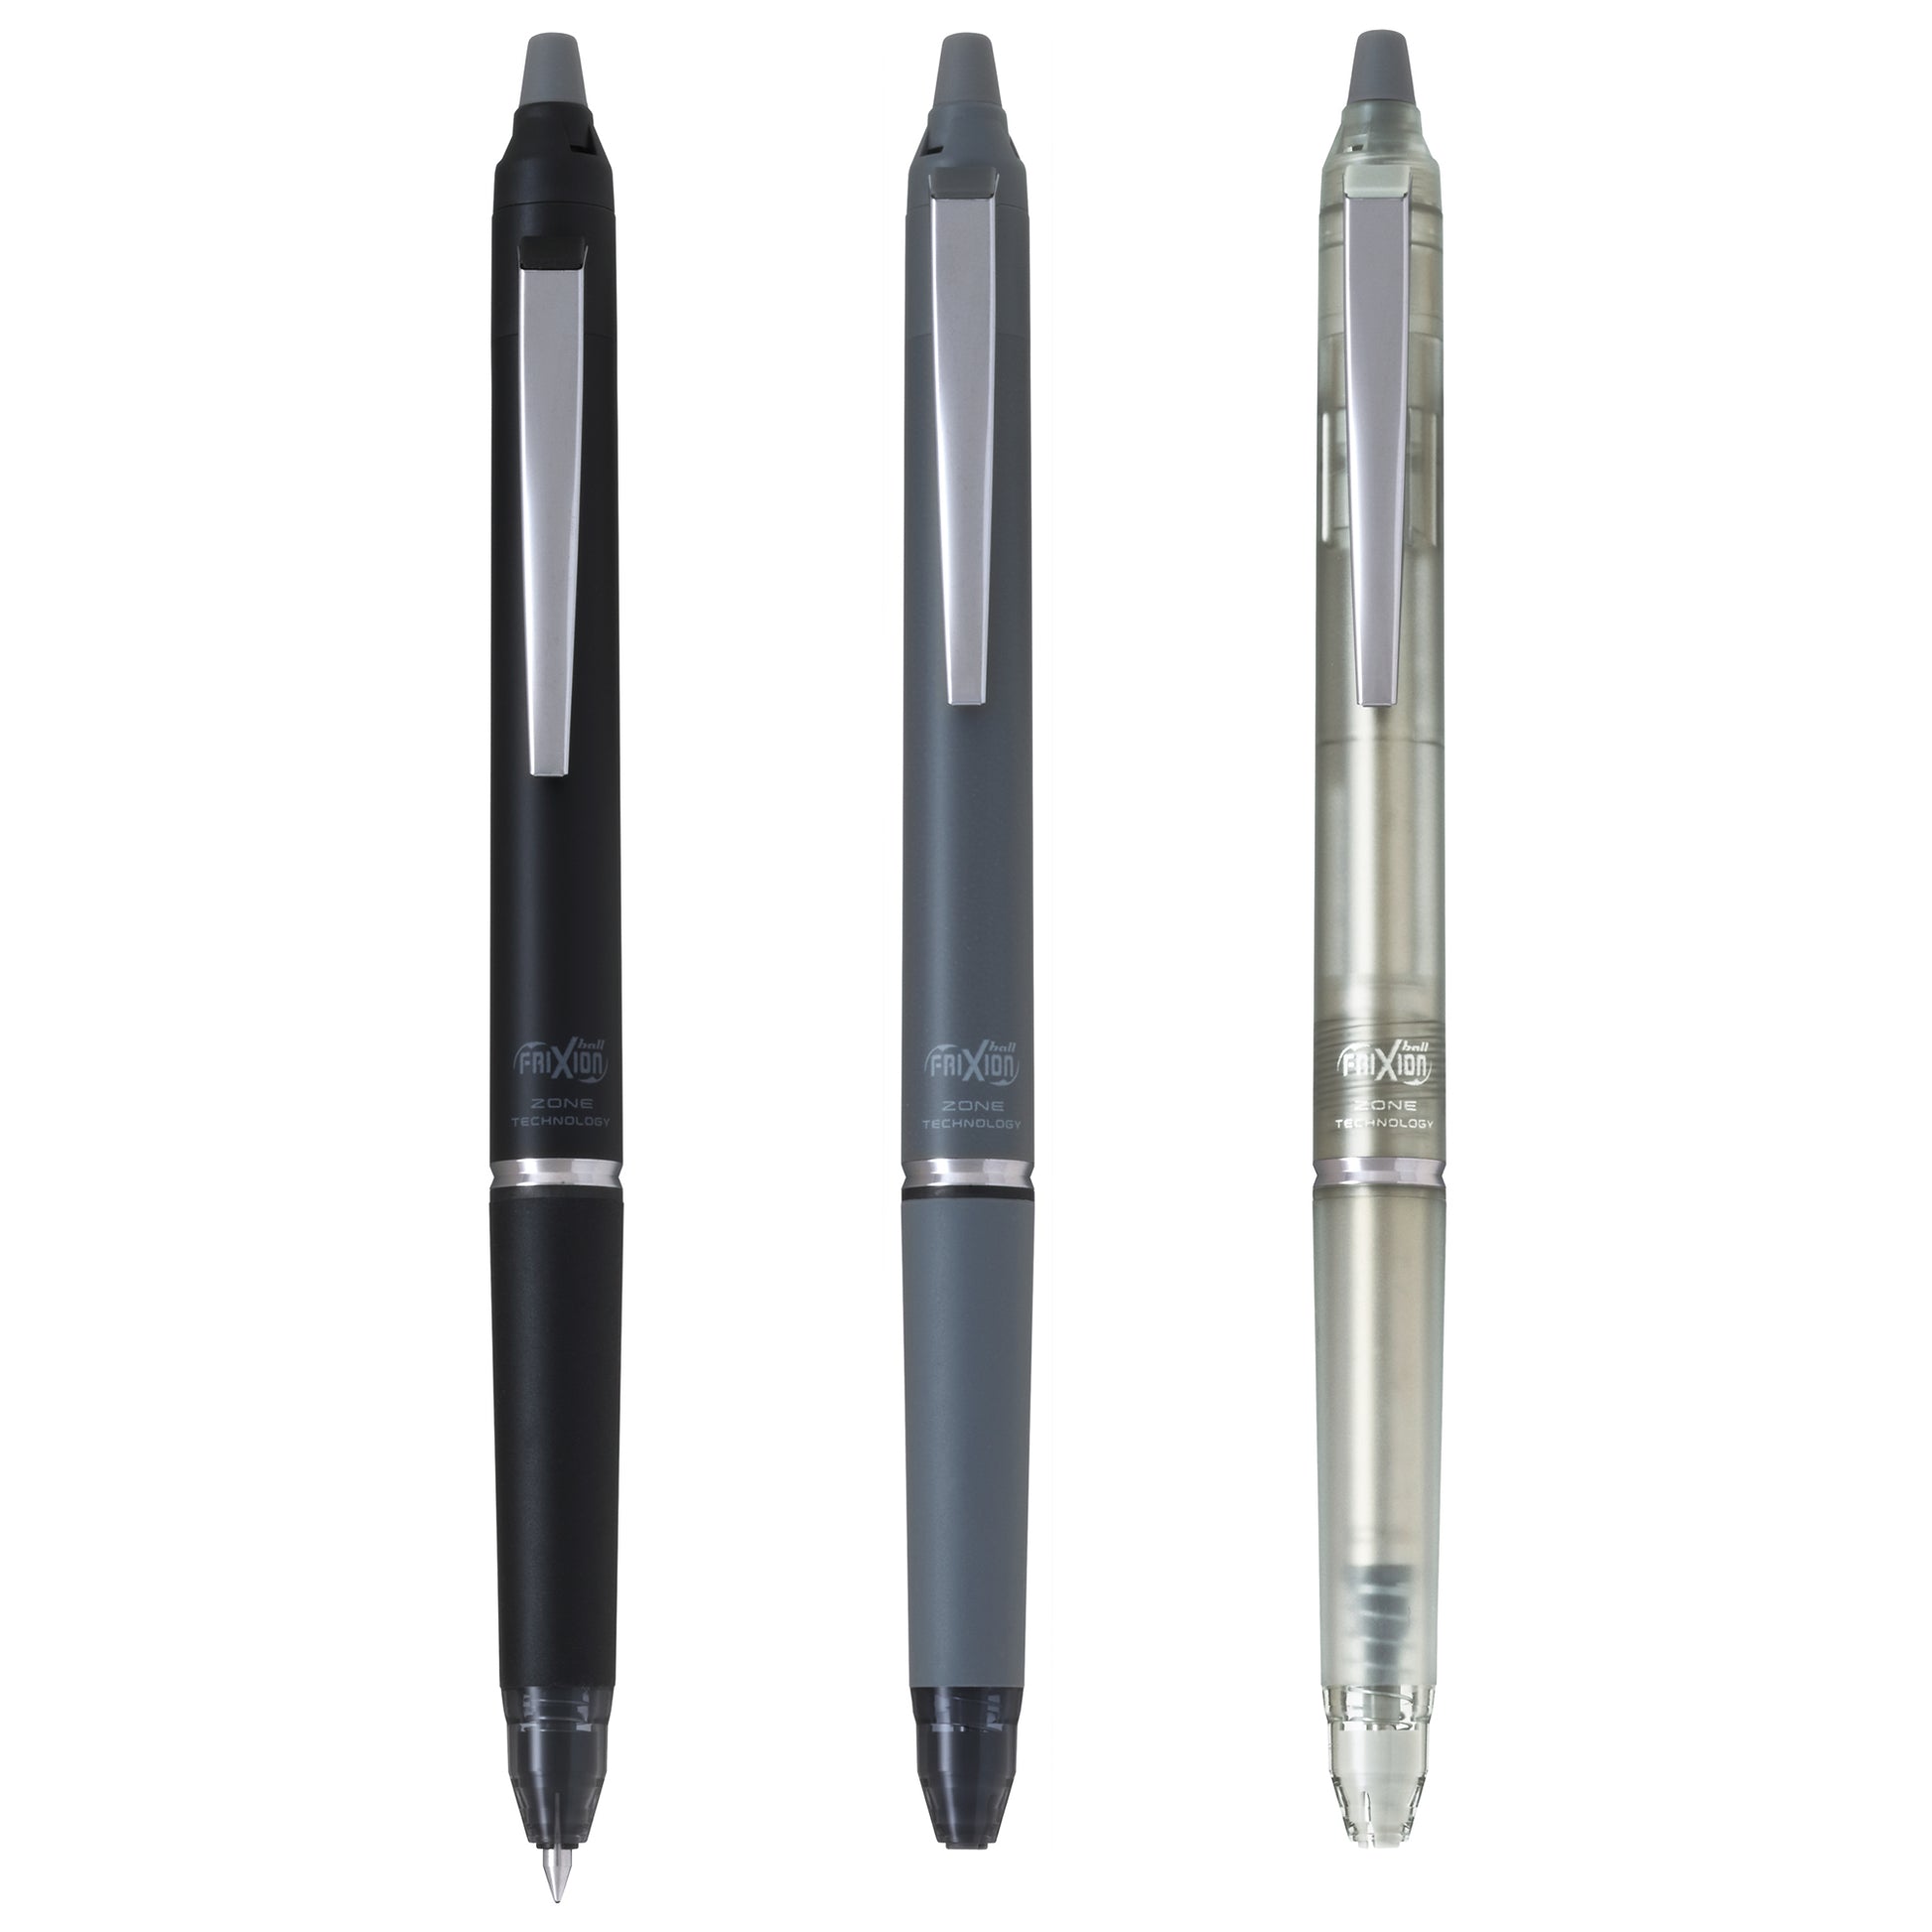 Pilot FriXion Ball Knock Zone 0.5mm Erasable Black Ink Ballpoint Pen (Pack of 3)